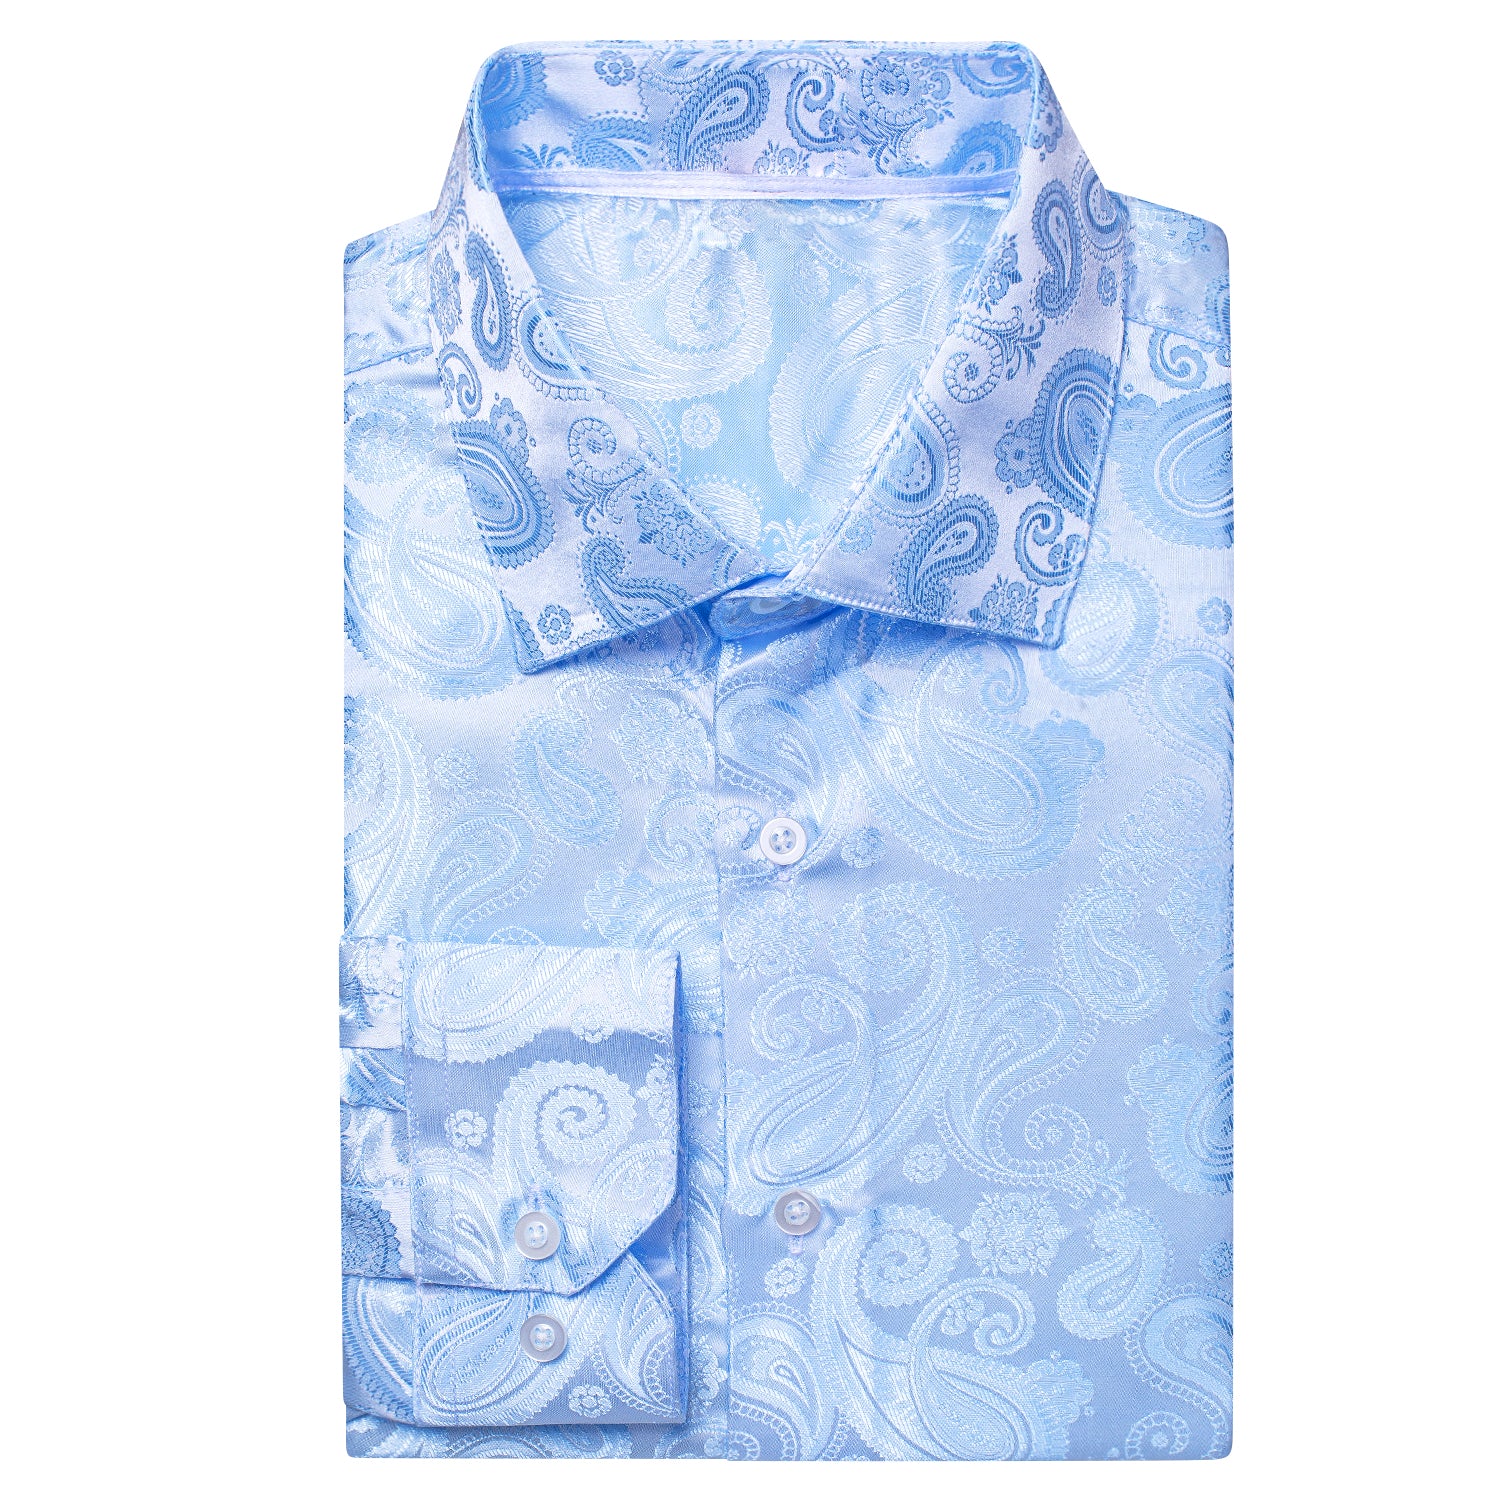 New Sky Blue Paisley Silk Men's Long Sleeve Shirt